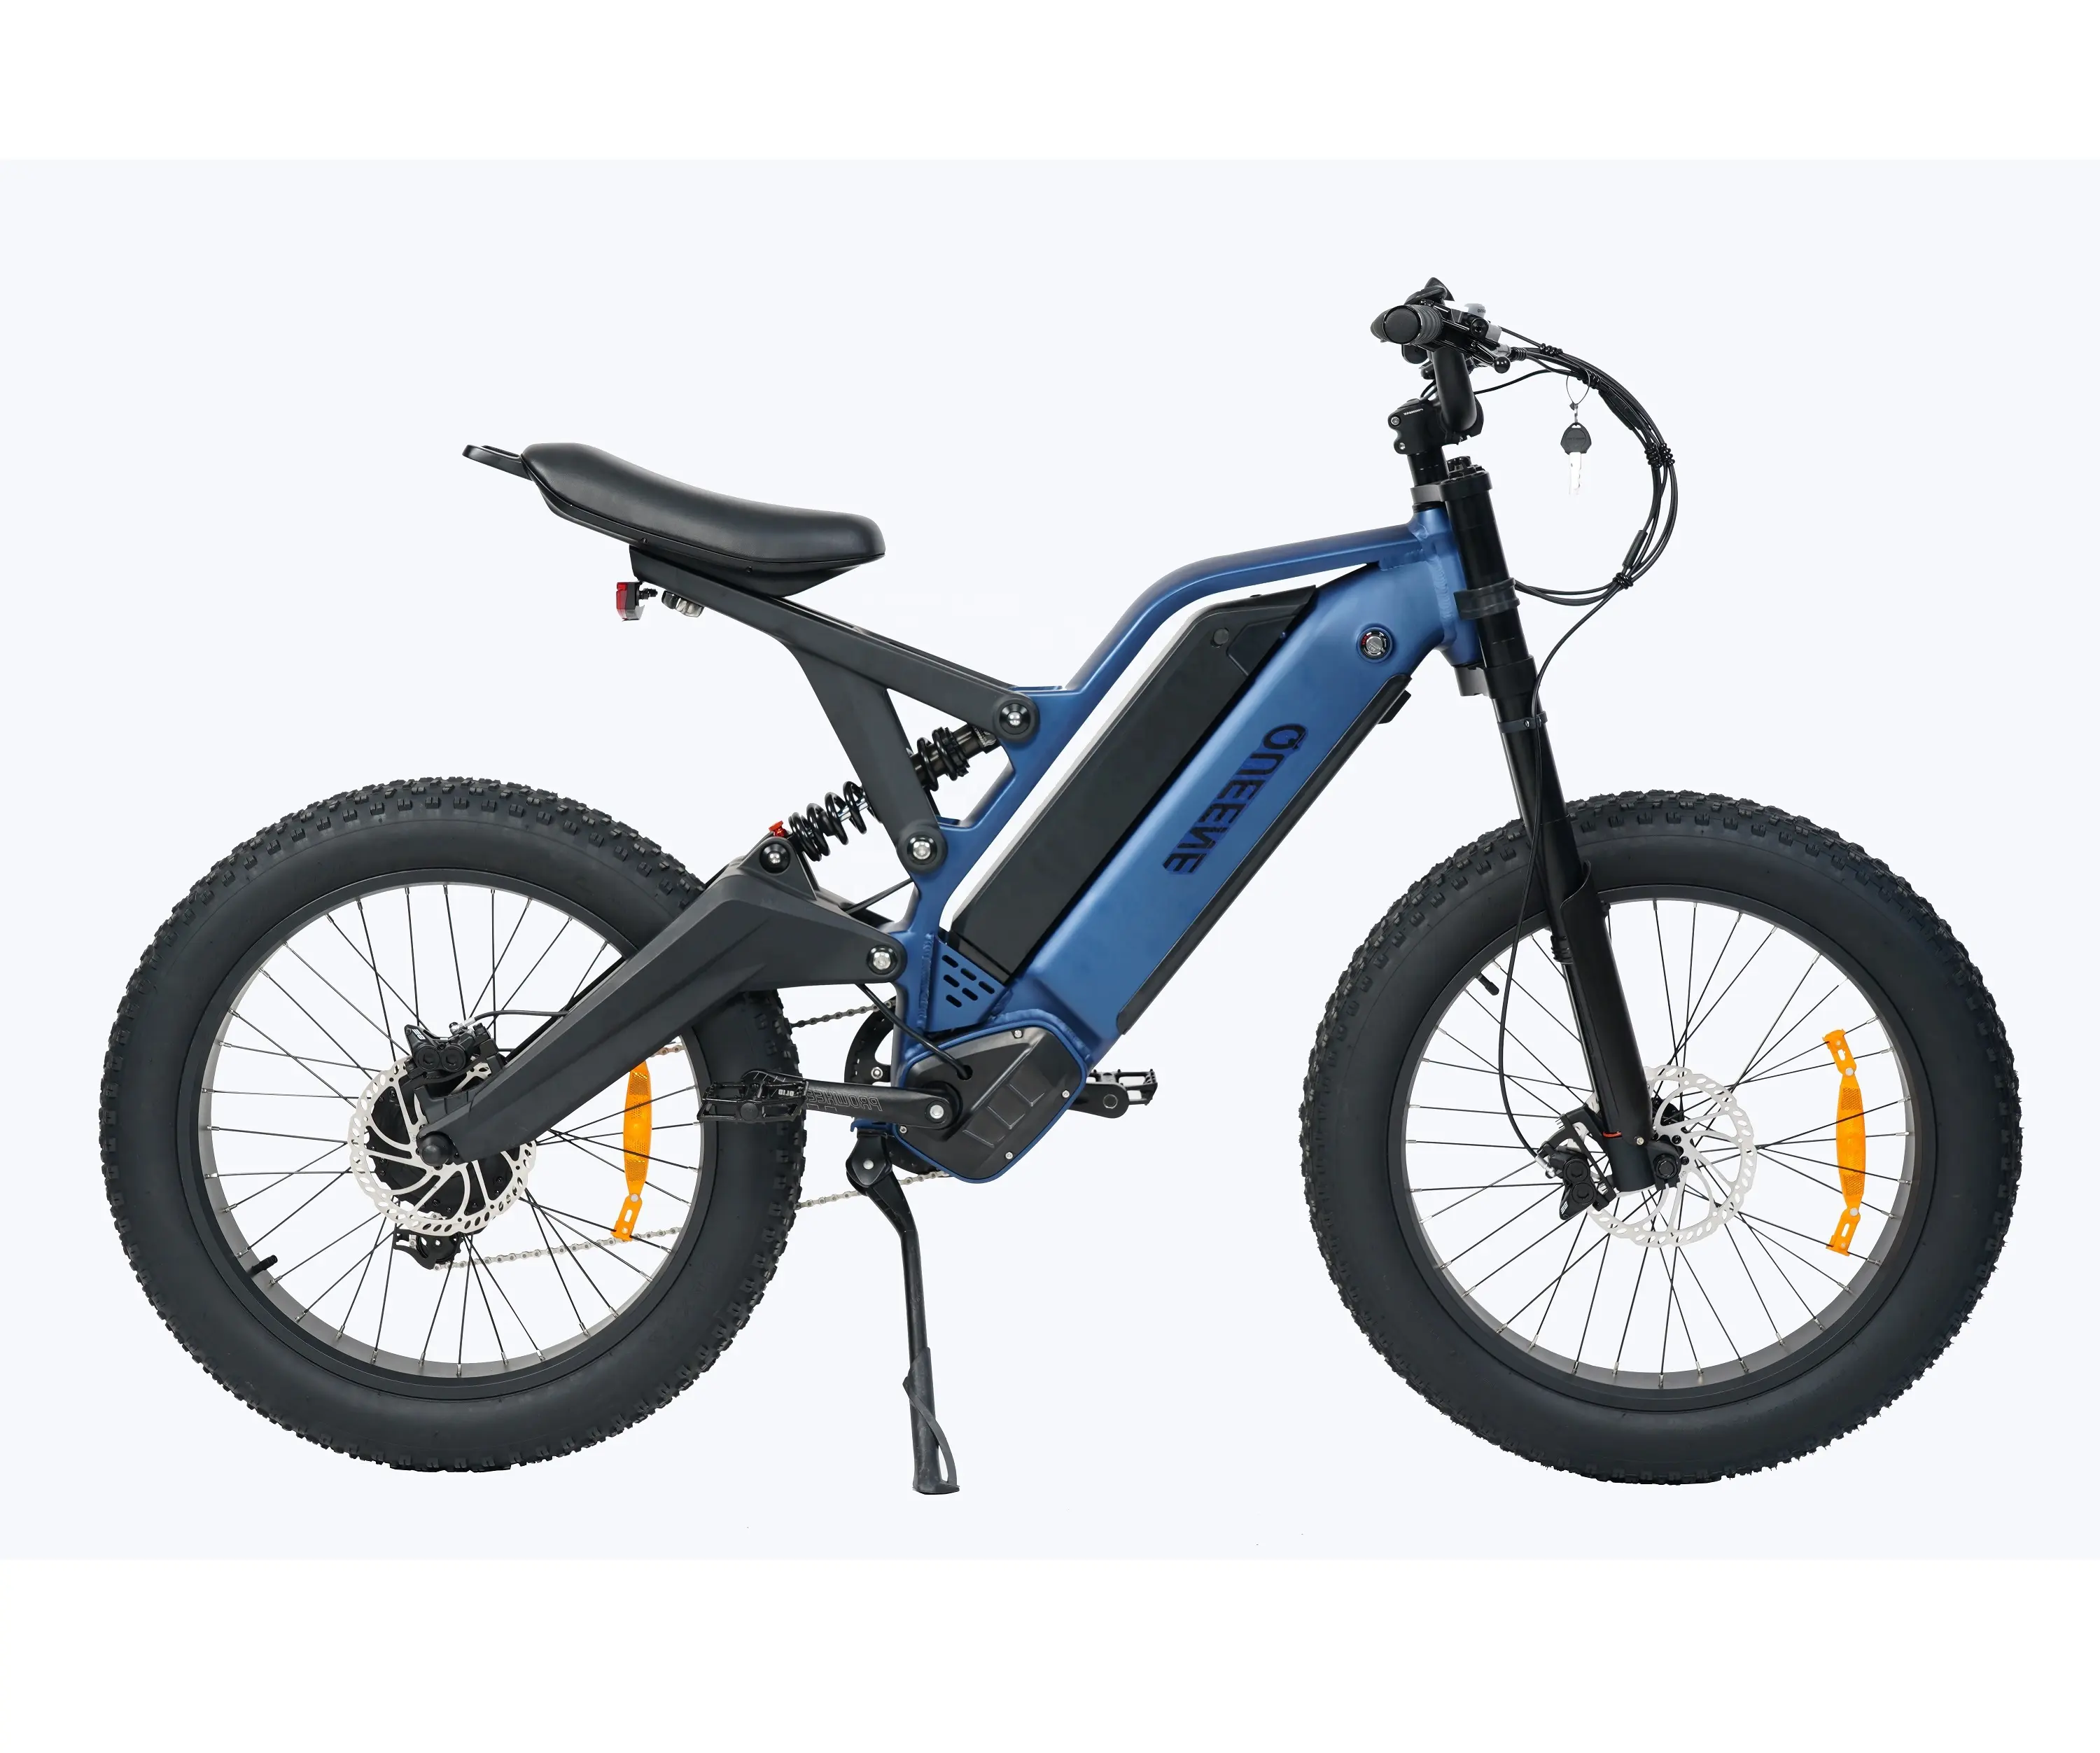 Queene Enduro 29er 풀 서스펜션 카본 Ebike 세련된 풀 파워 허브 모터 리튬 배터리가 장착 된 전기 산악 자전거